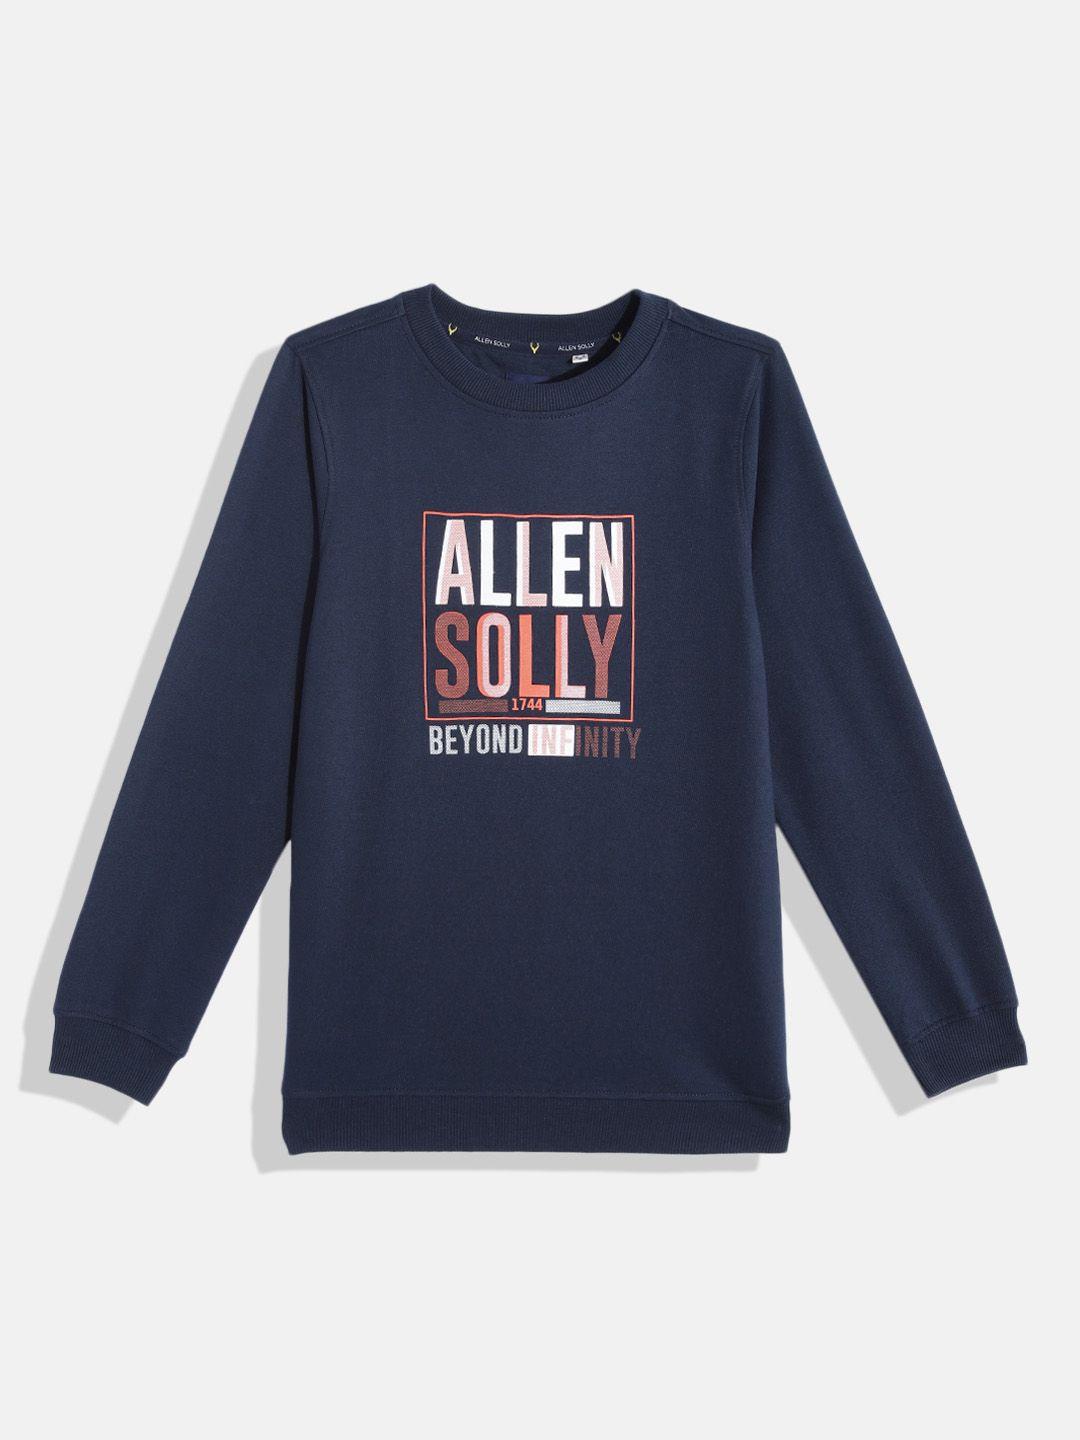 allen solly junior boys navy blue & orange brand logo printed sweatshirt